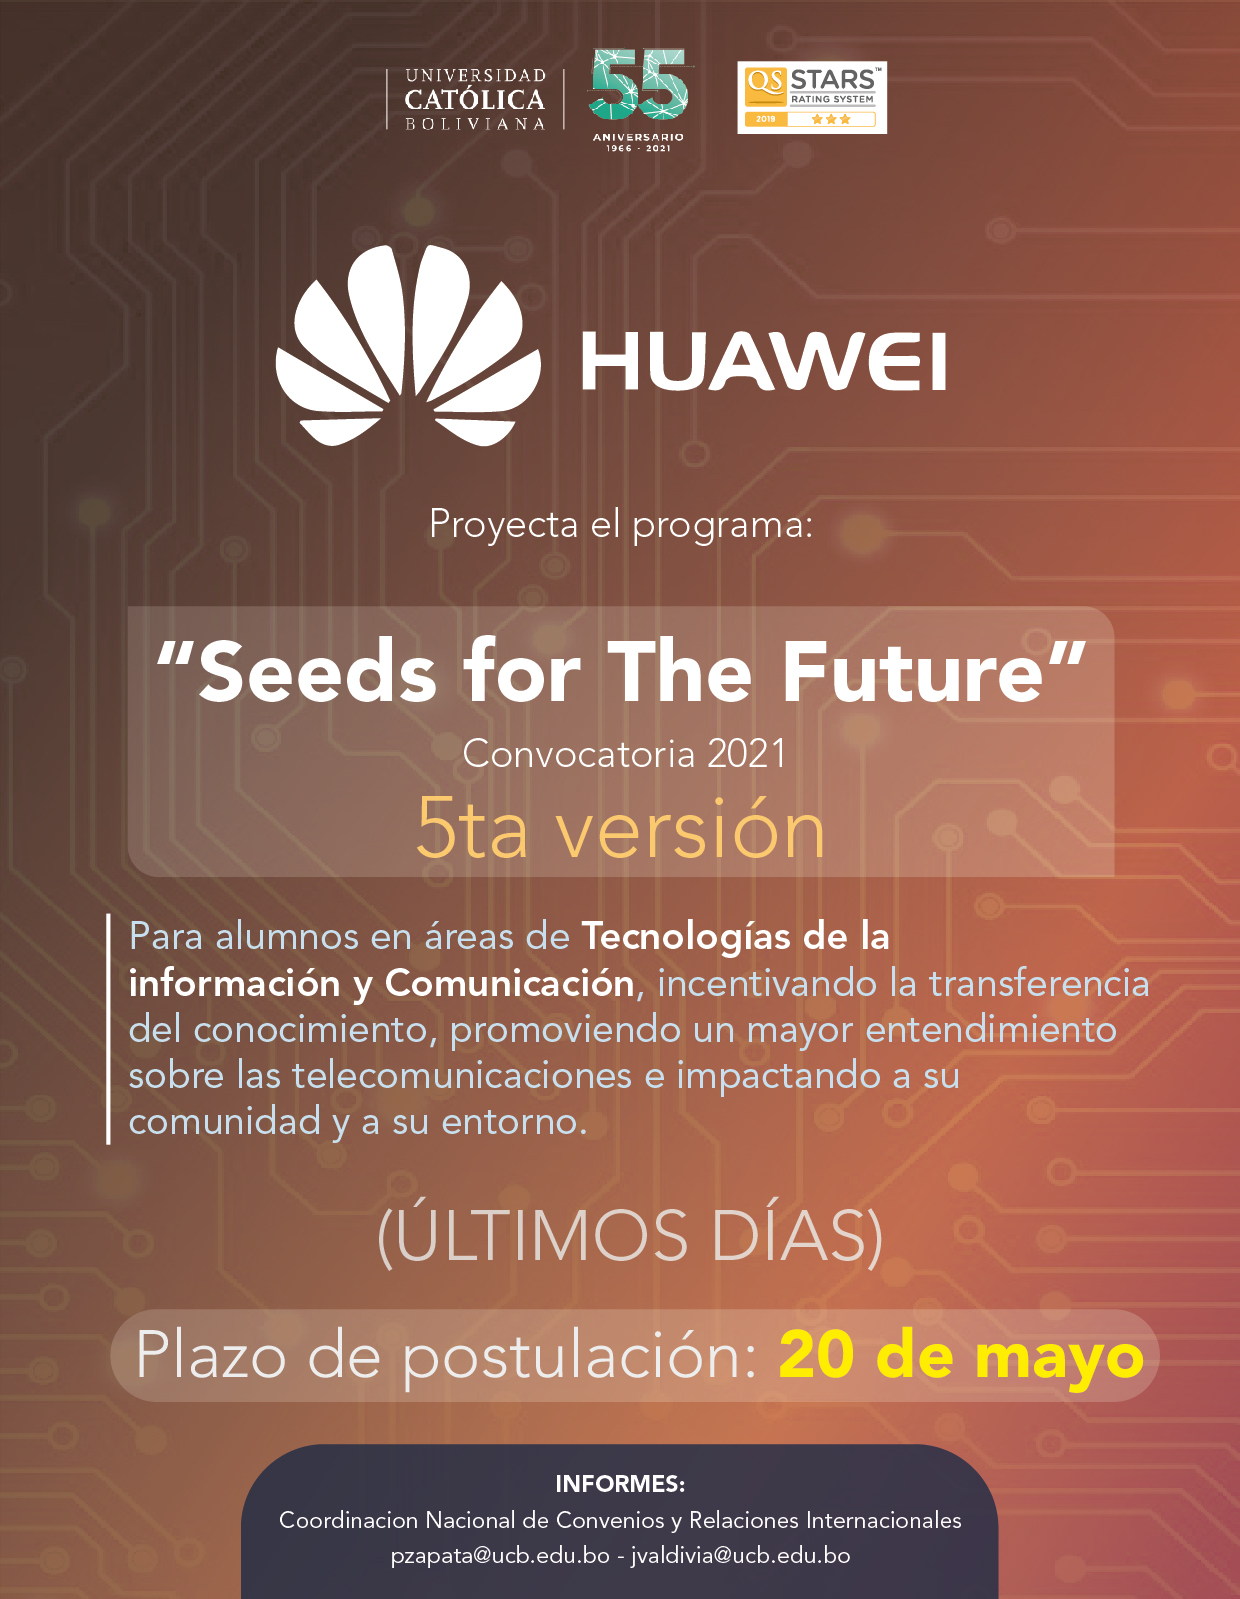 ÚLTIMOS DÍAS PARA POSTULAR   Huawei abre la Convocatoria 2021 del Programa   “SEEDS FOR THE FUTURE”